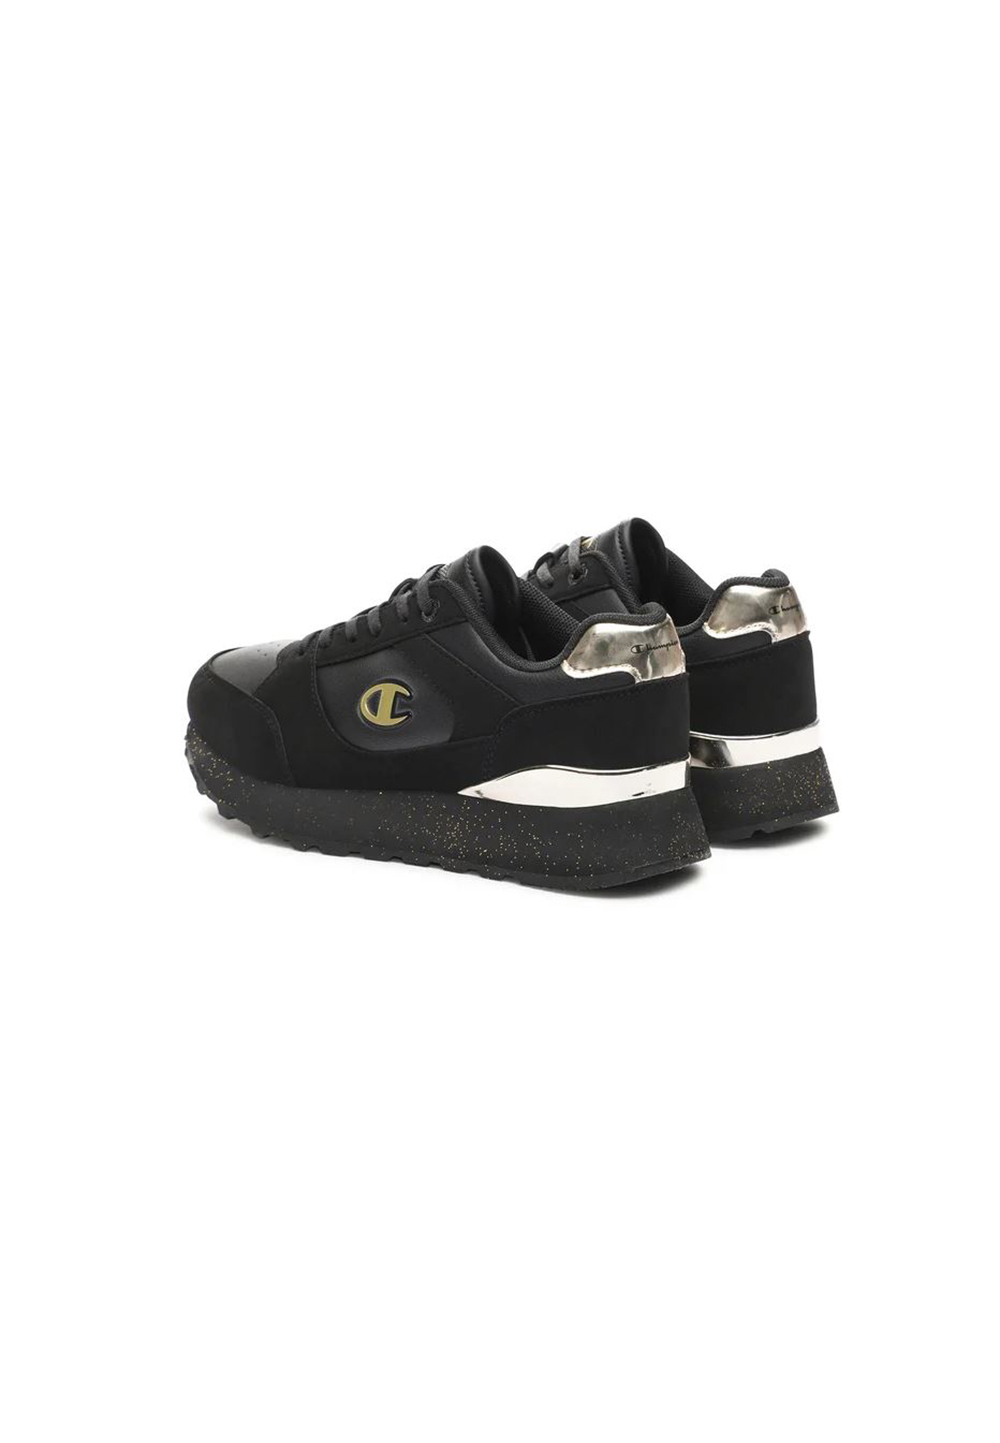 Champion Damen Sneakers Low Cut Shoe Rr Champ Ii Plat Metal S11615 schwarz gold